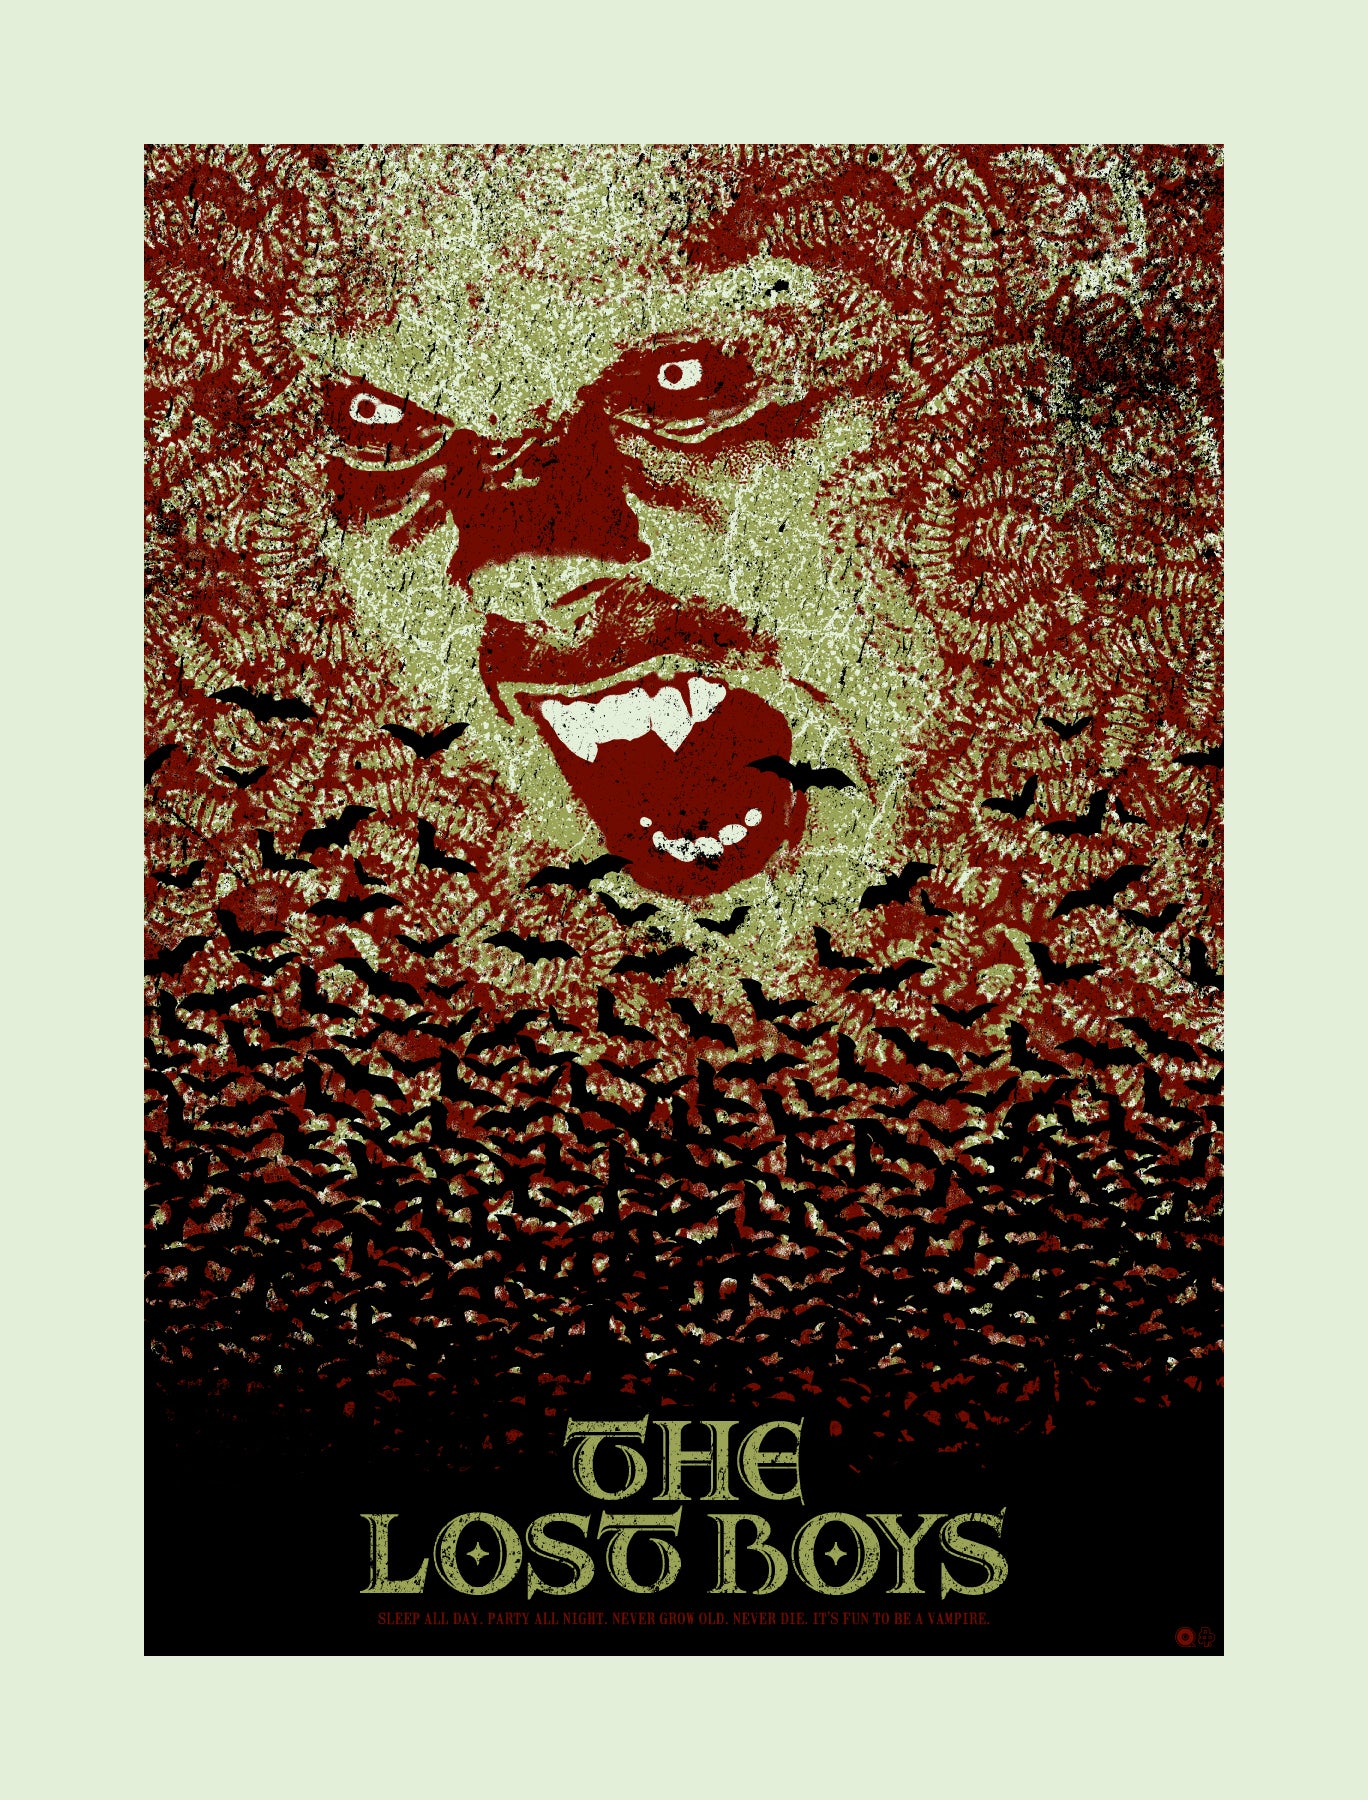 "The Lost Boys" by Chris Garofalo